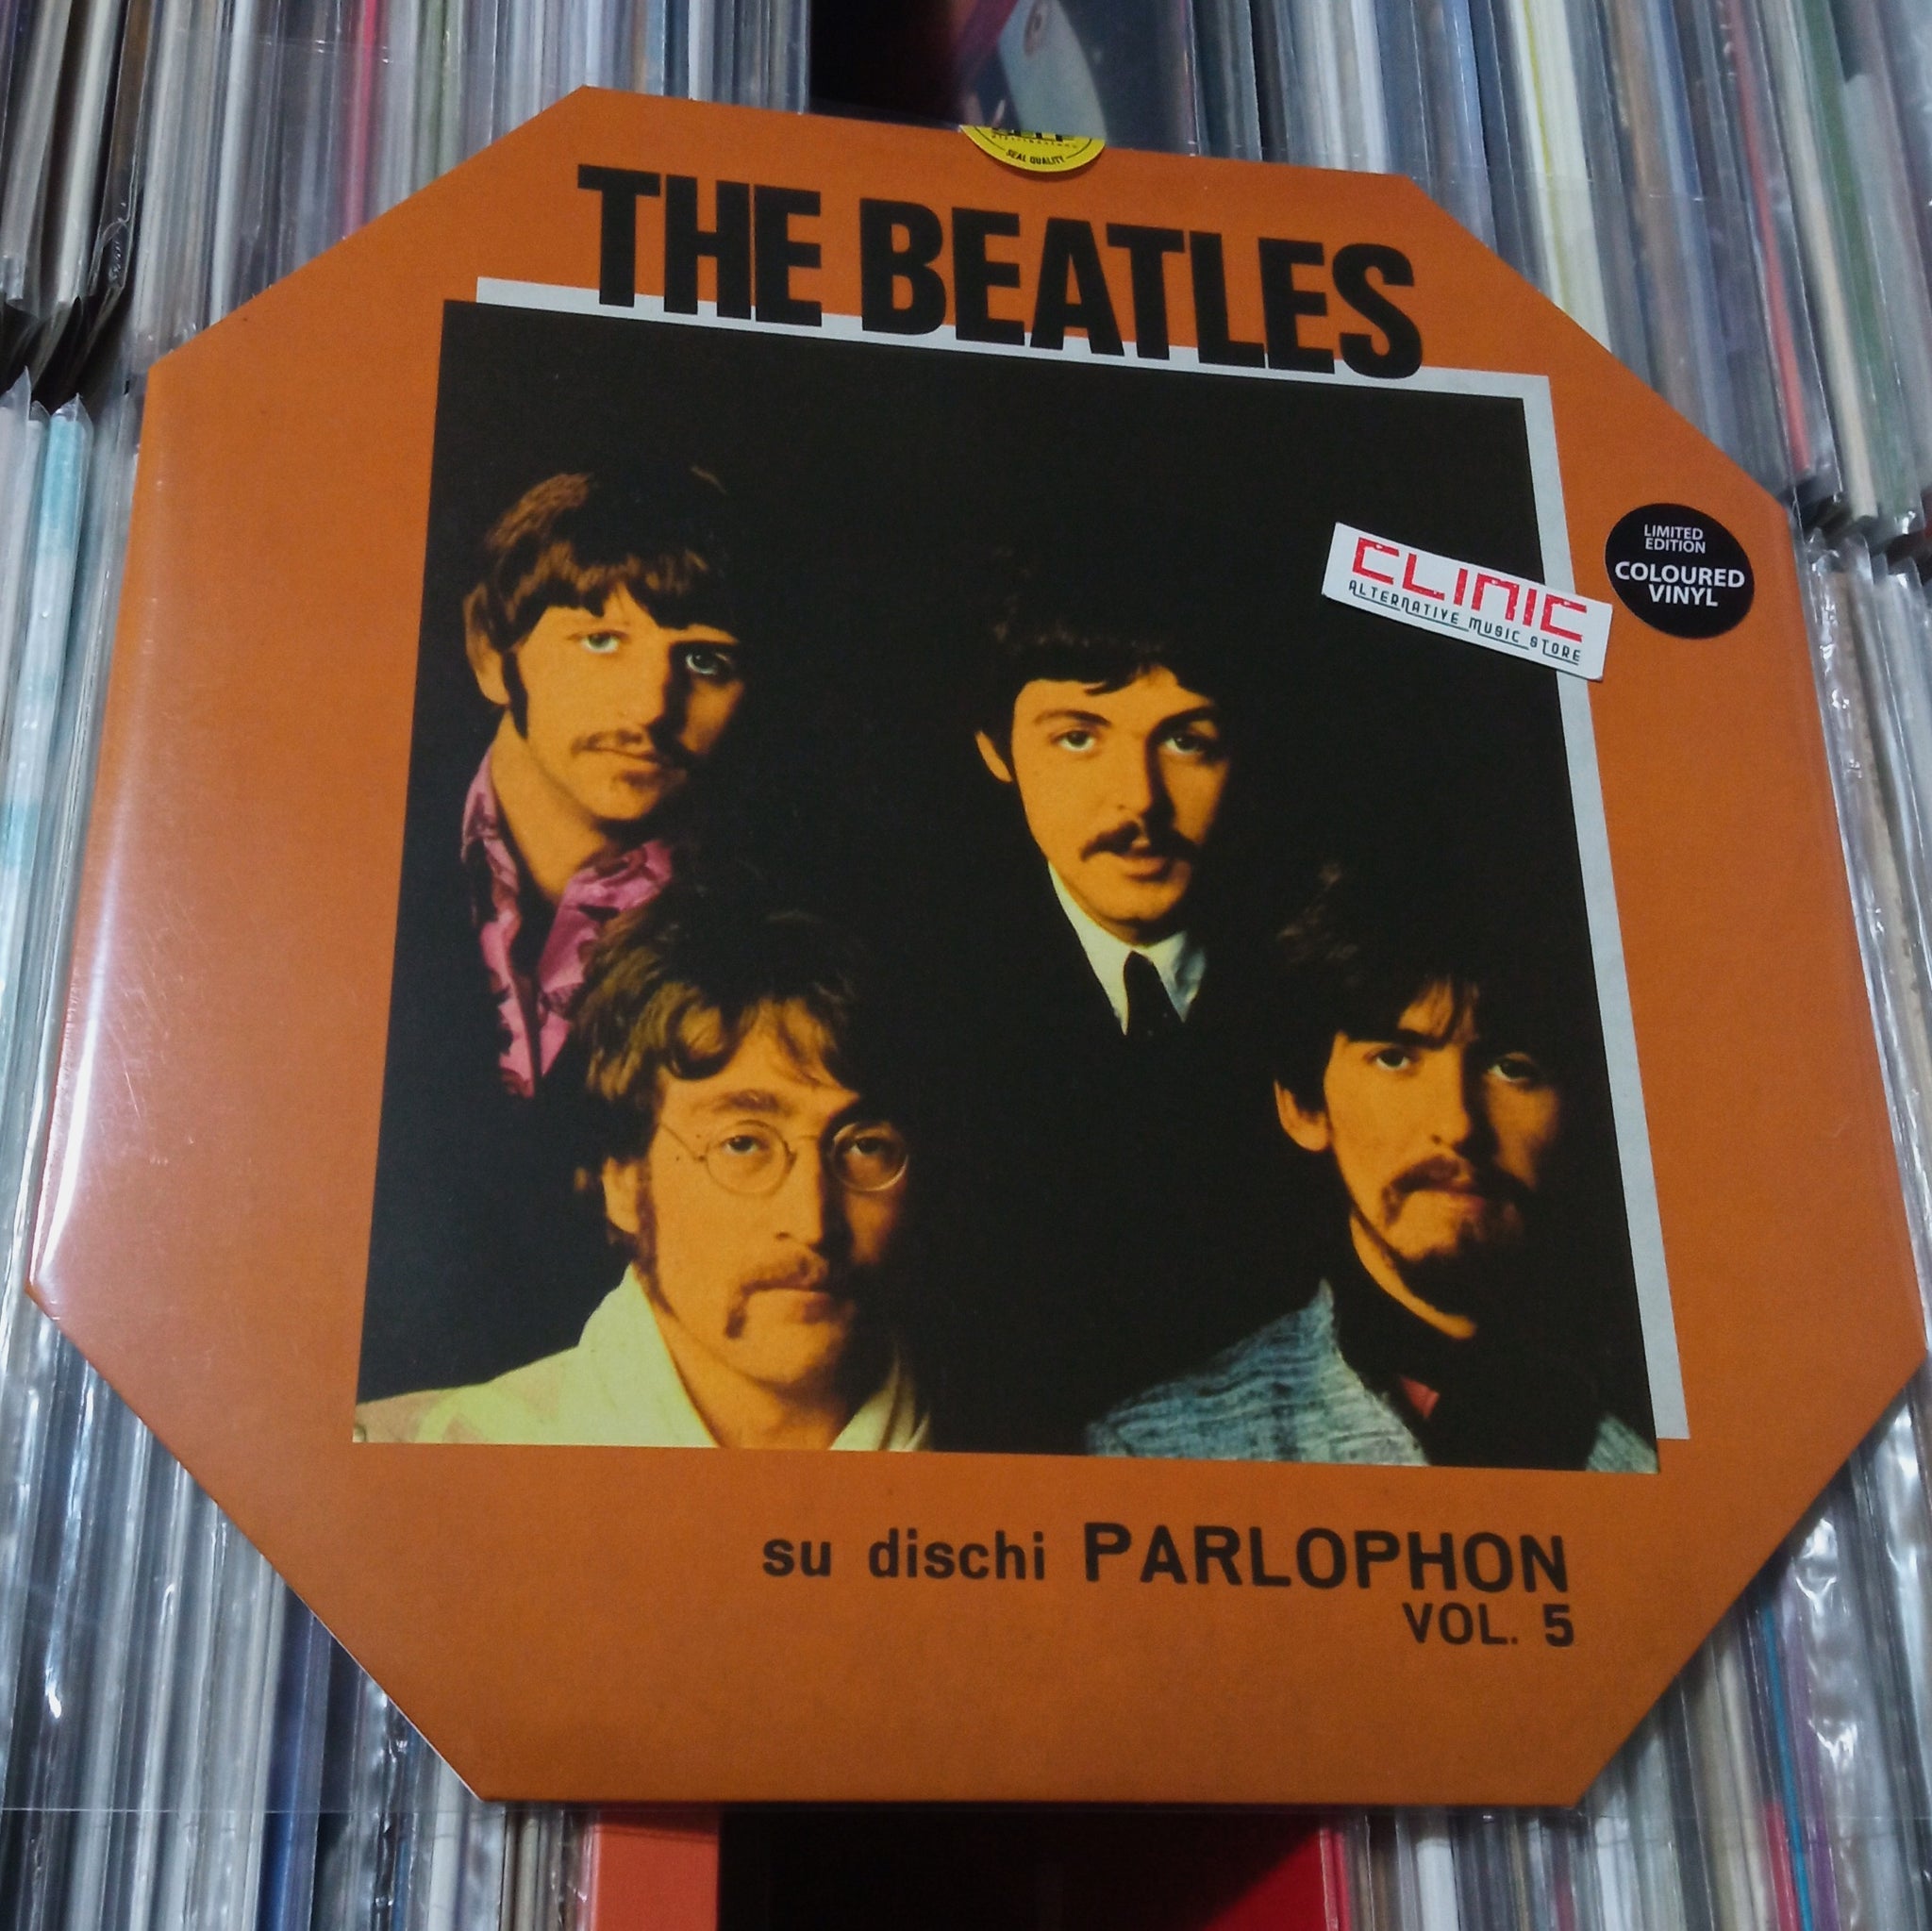 LP - THE BEATLES - PARLOPHON VOL. 5 (Limited Edition)